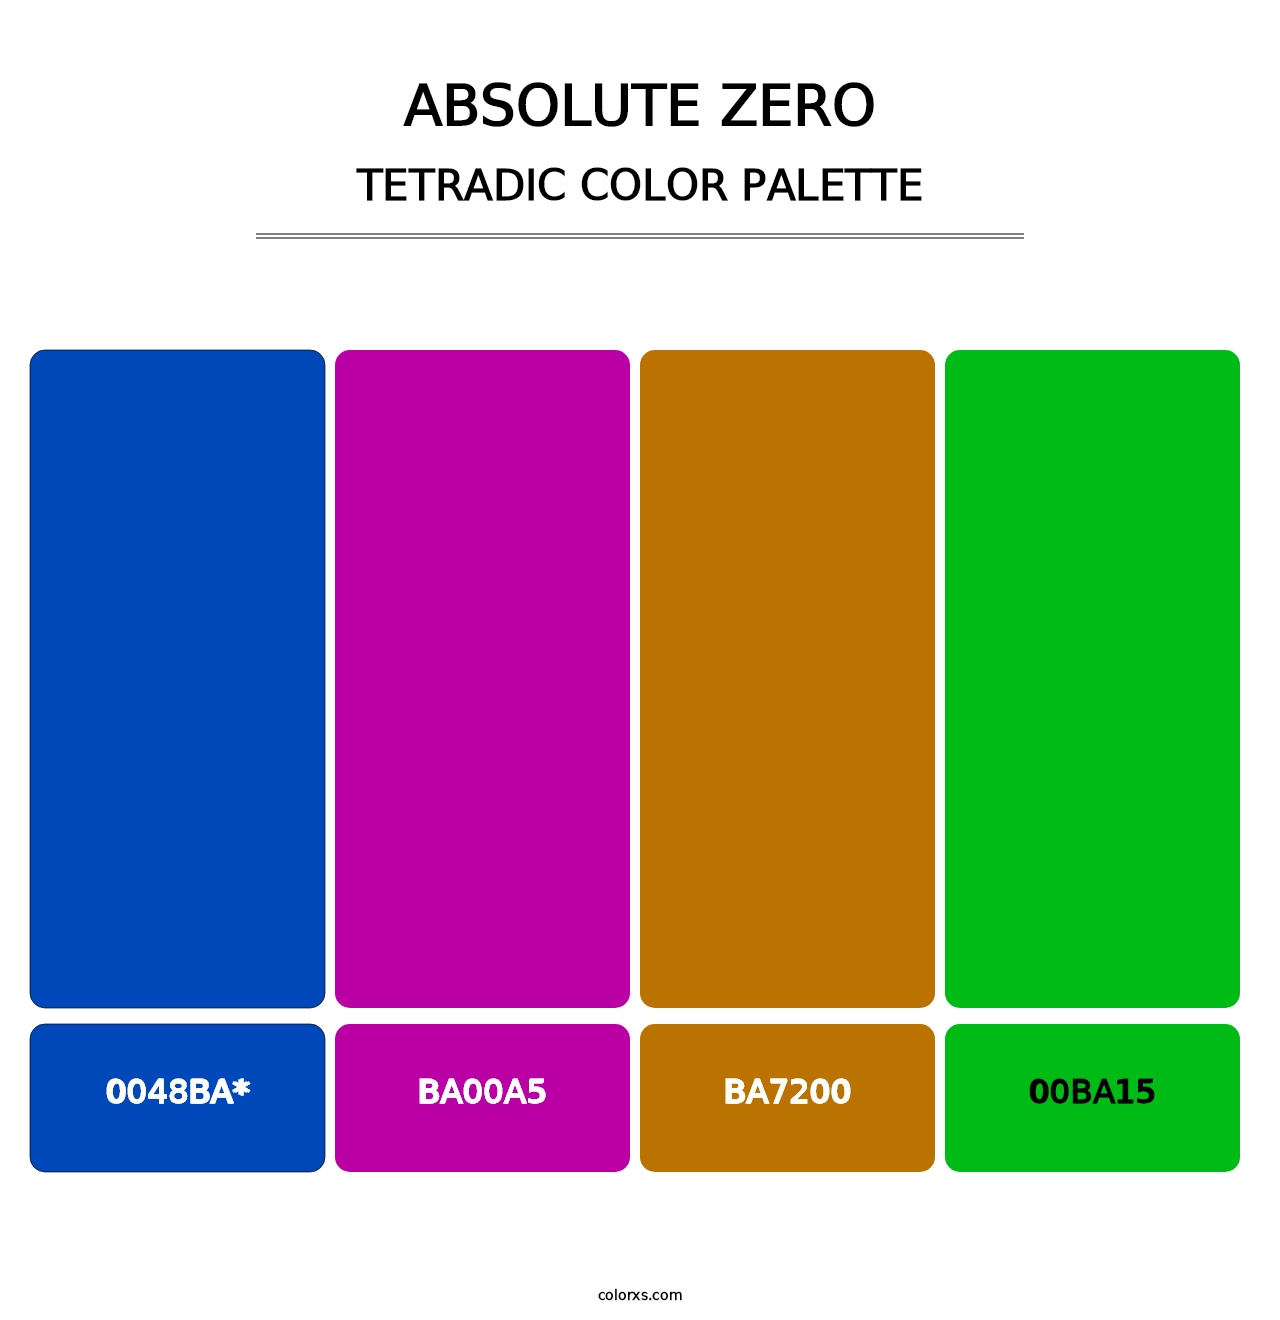 Absolute Zero - Tetradic Color Palette